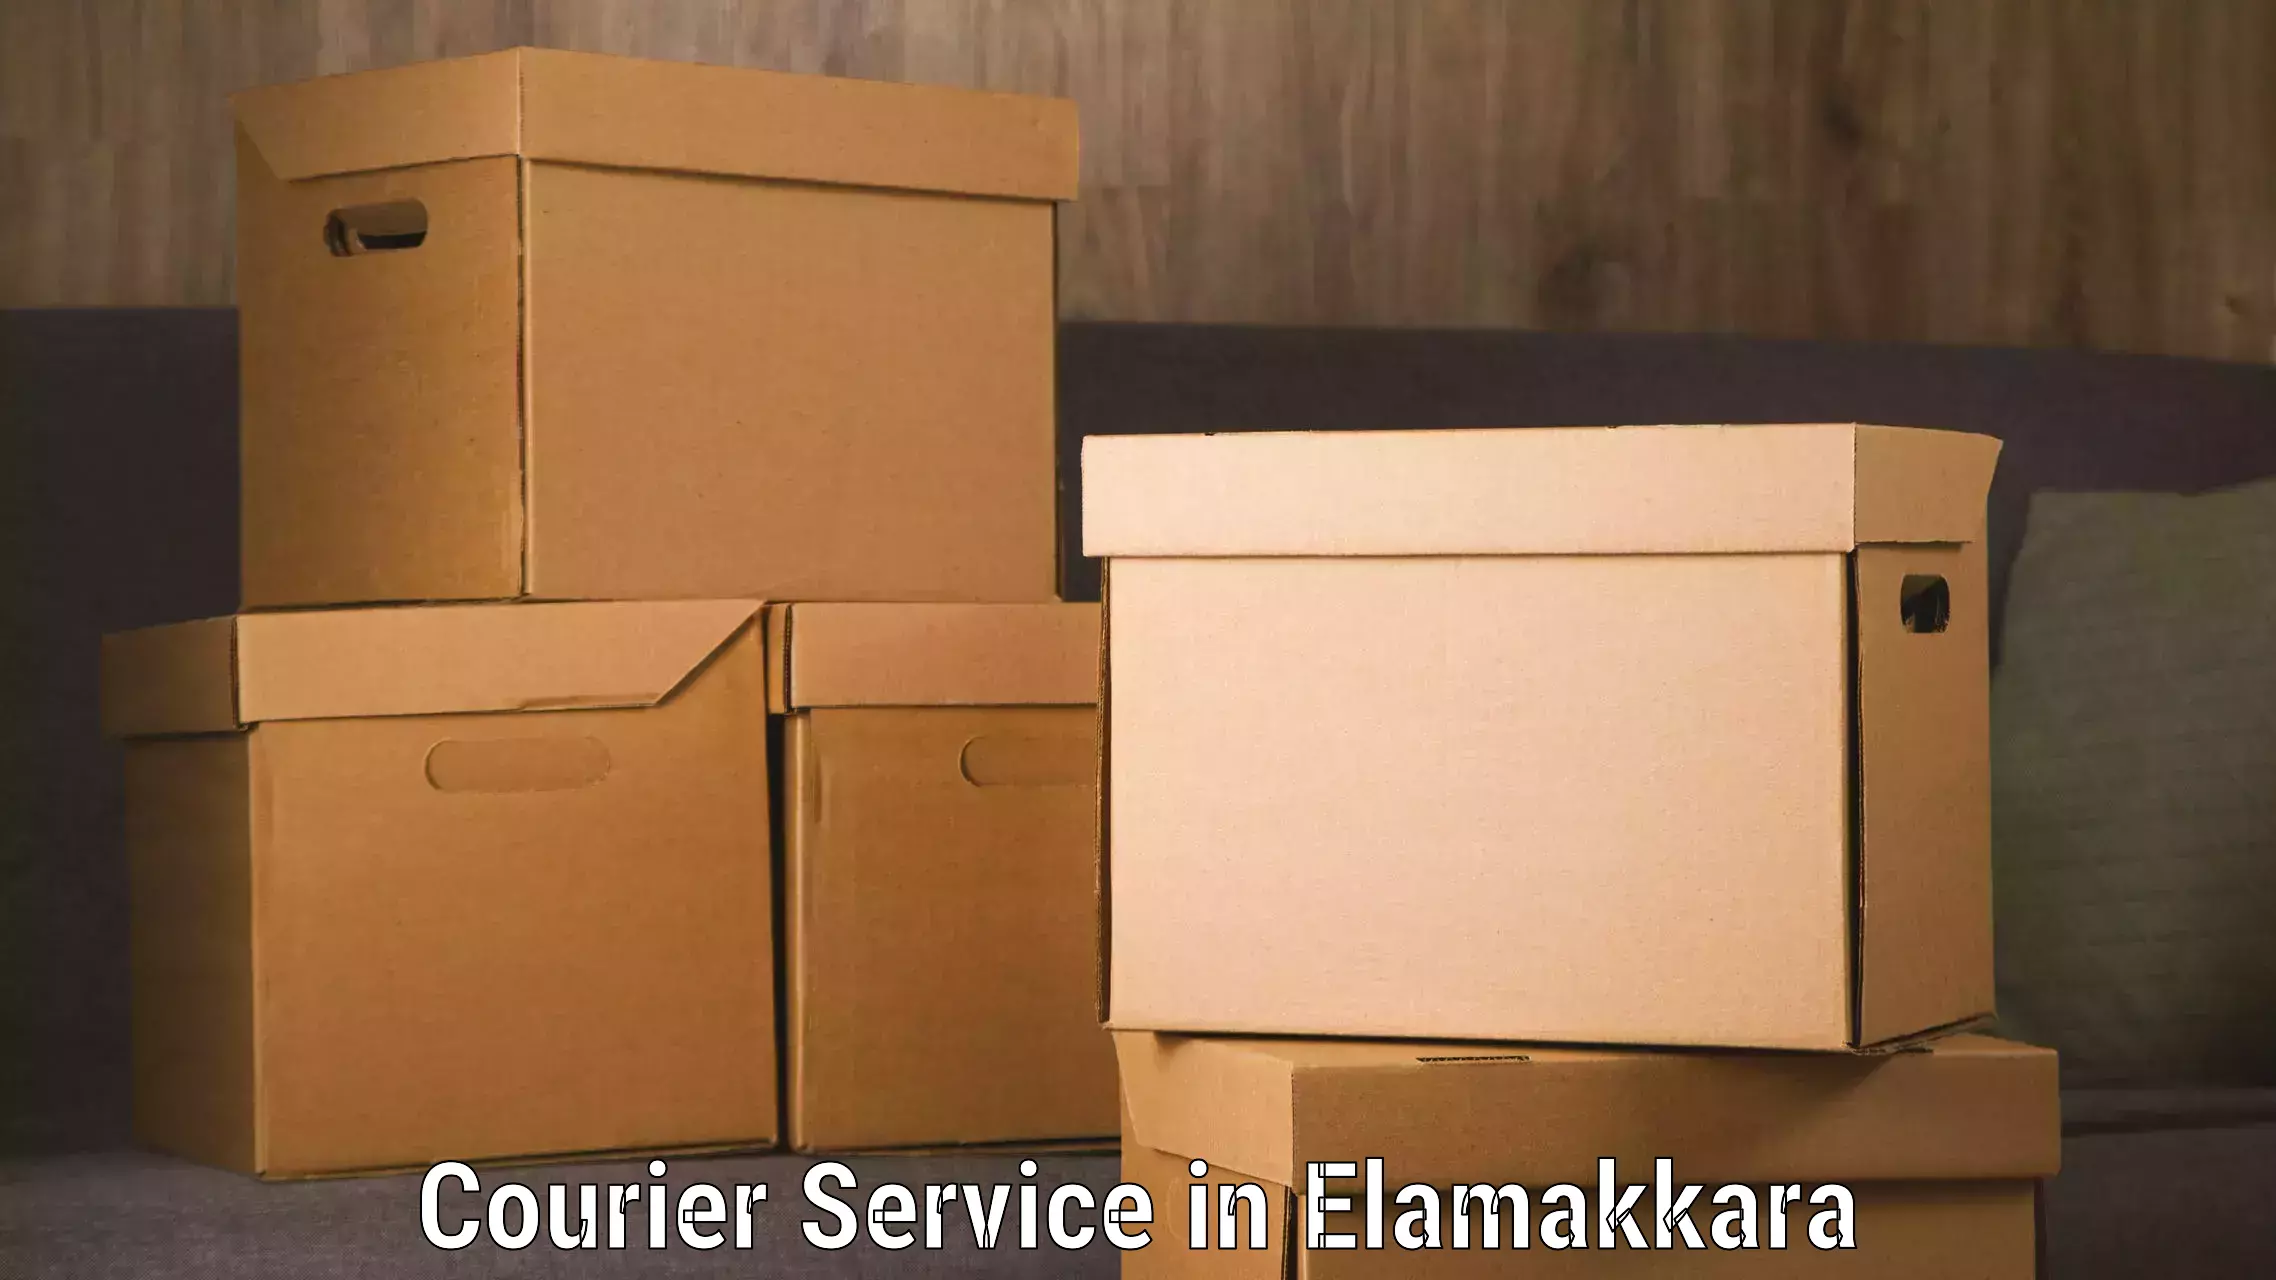 Rapid freight solutions in Elamakkara